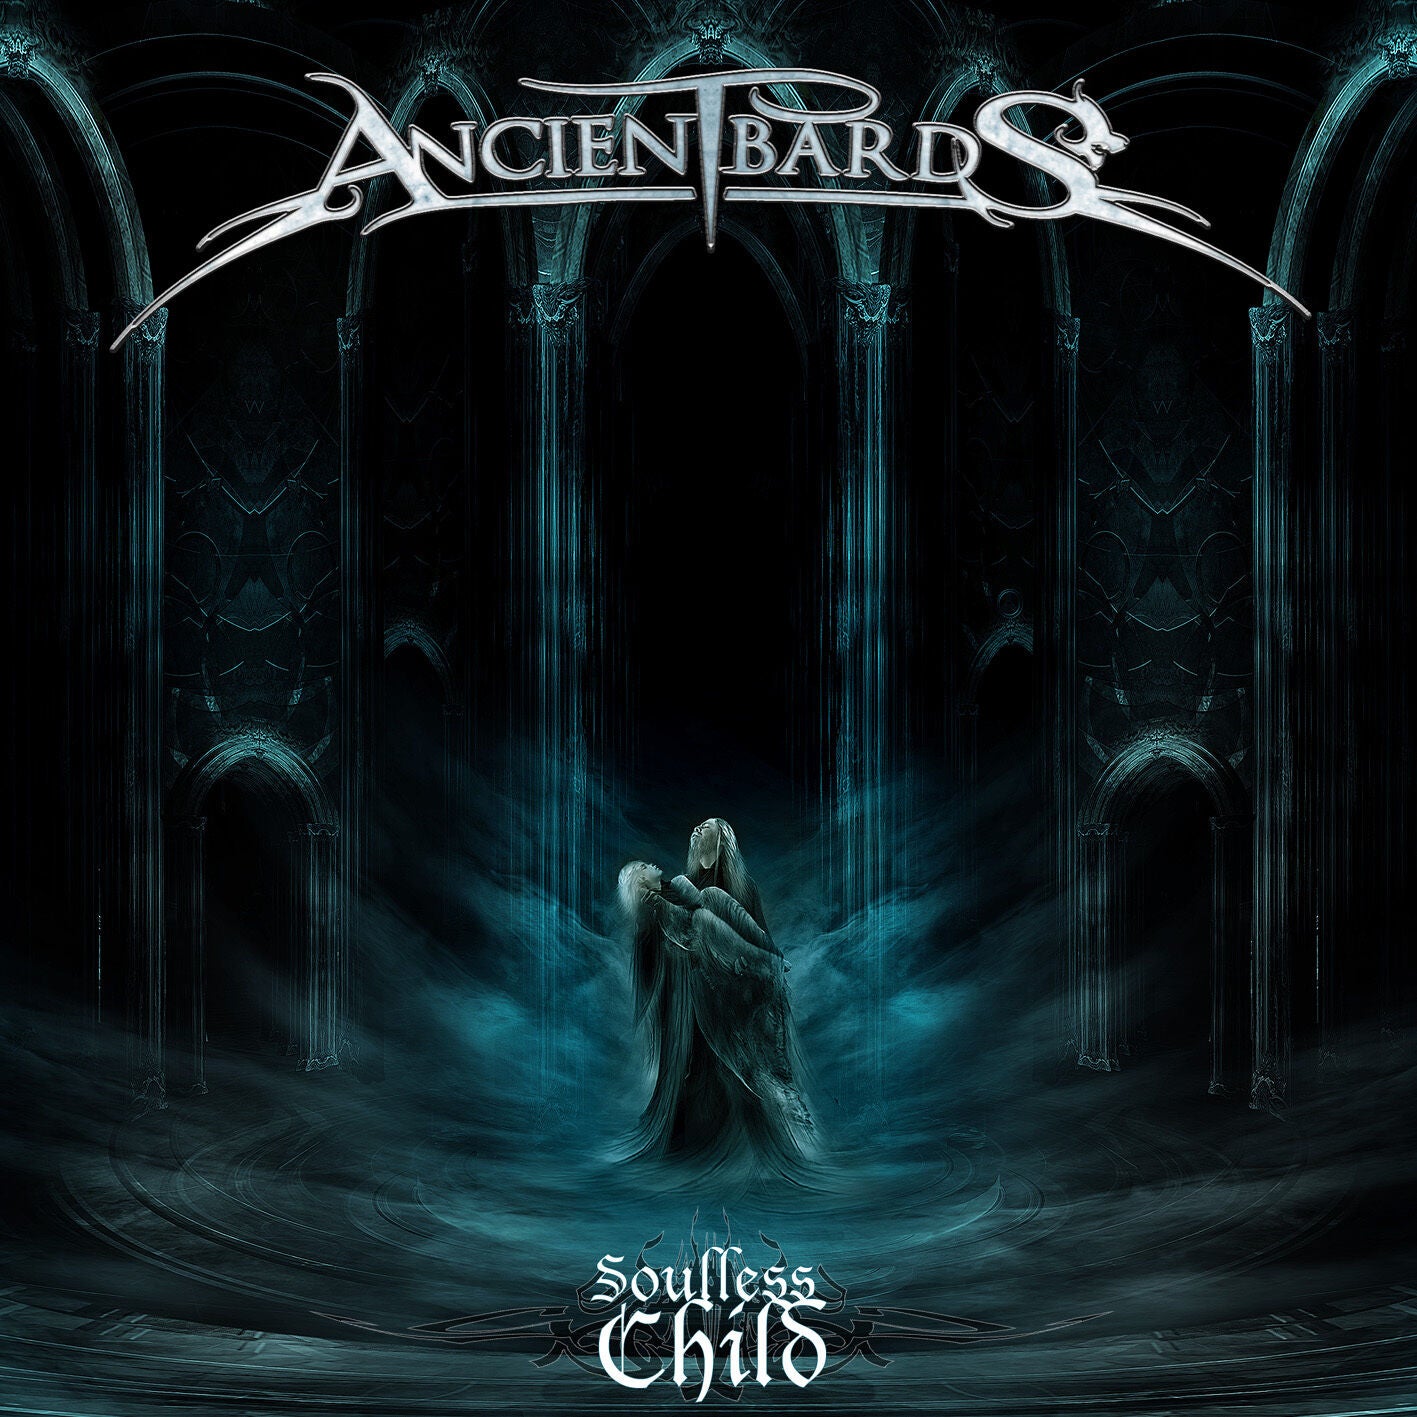 ANCIENT BARDS - Soulless Child CD 2011 Rhapsody Epica Amberian Dawn Edenbridge